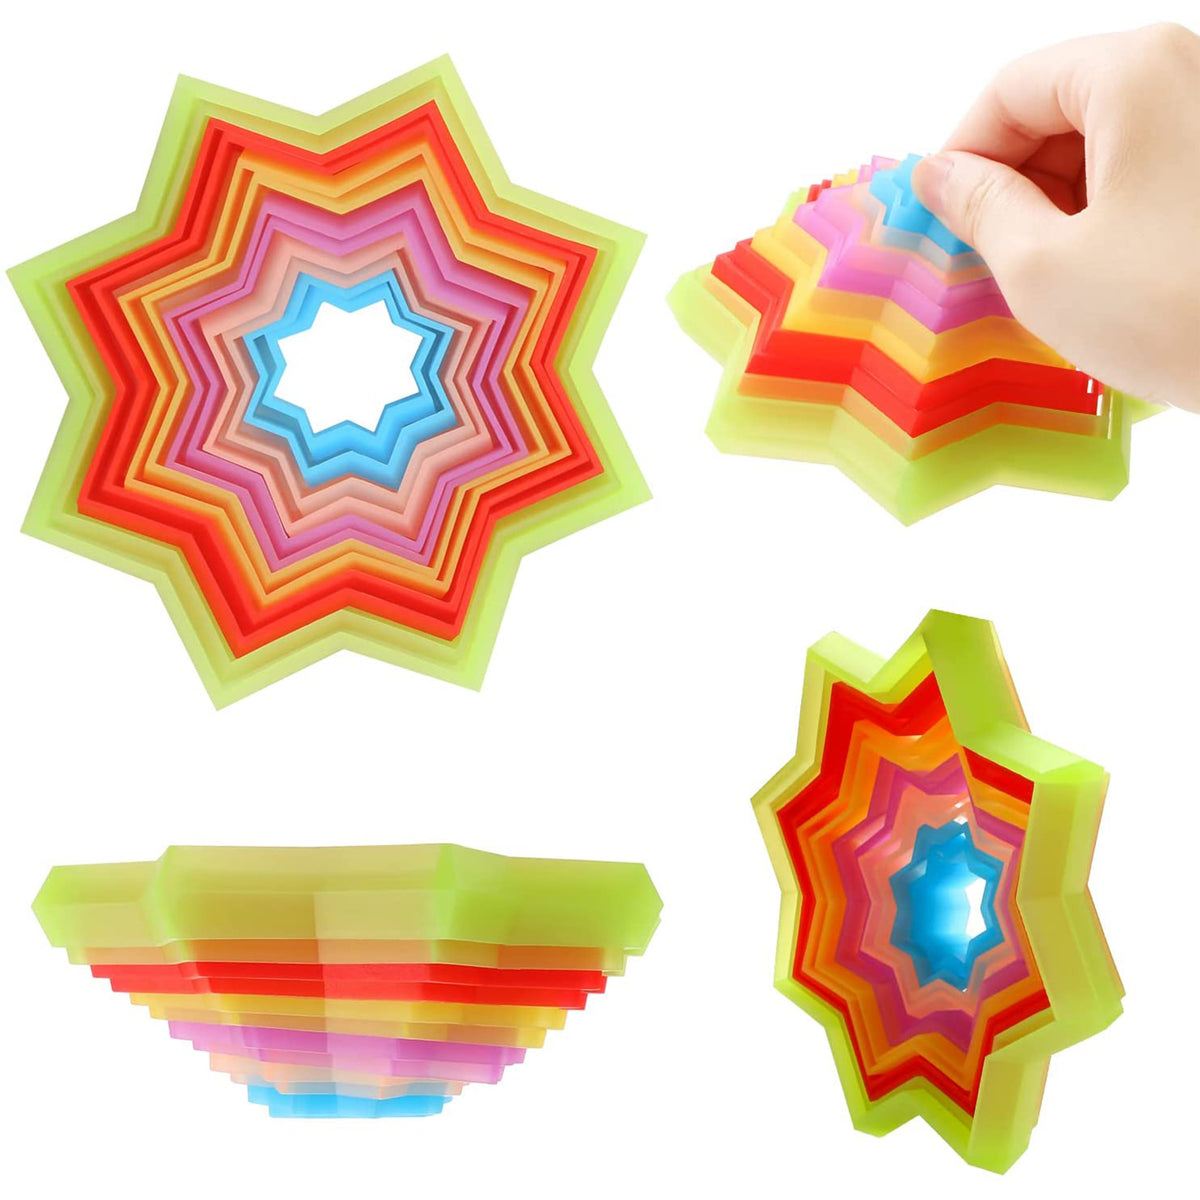 3D Plastic Colorful Magic Star Toy